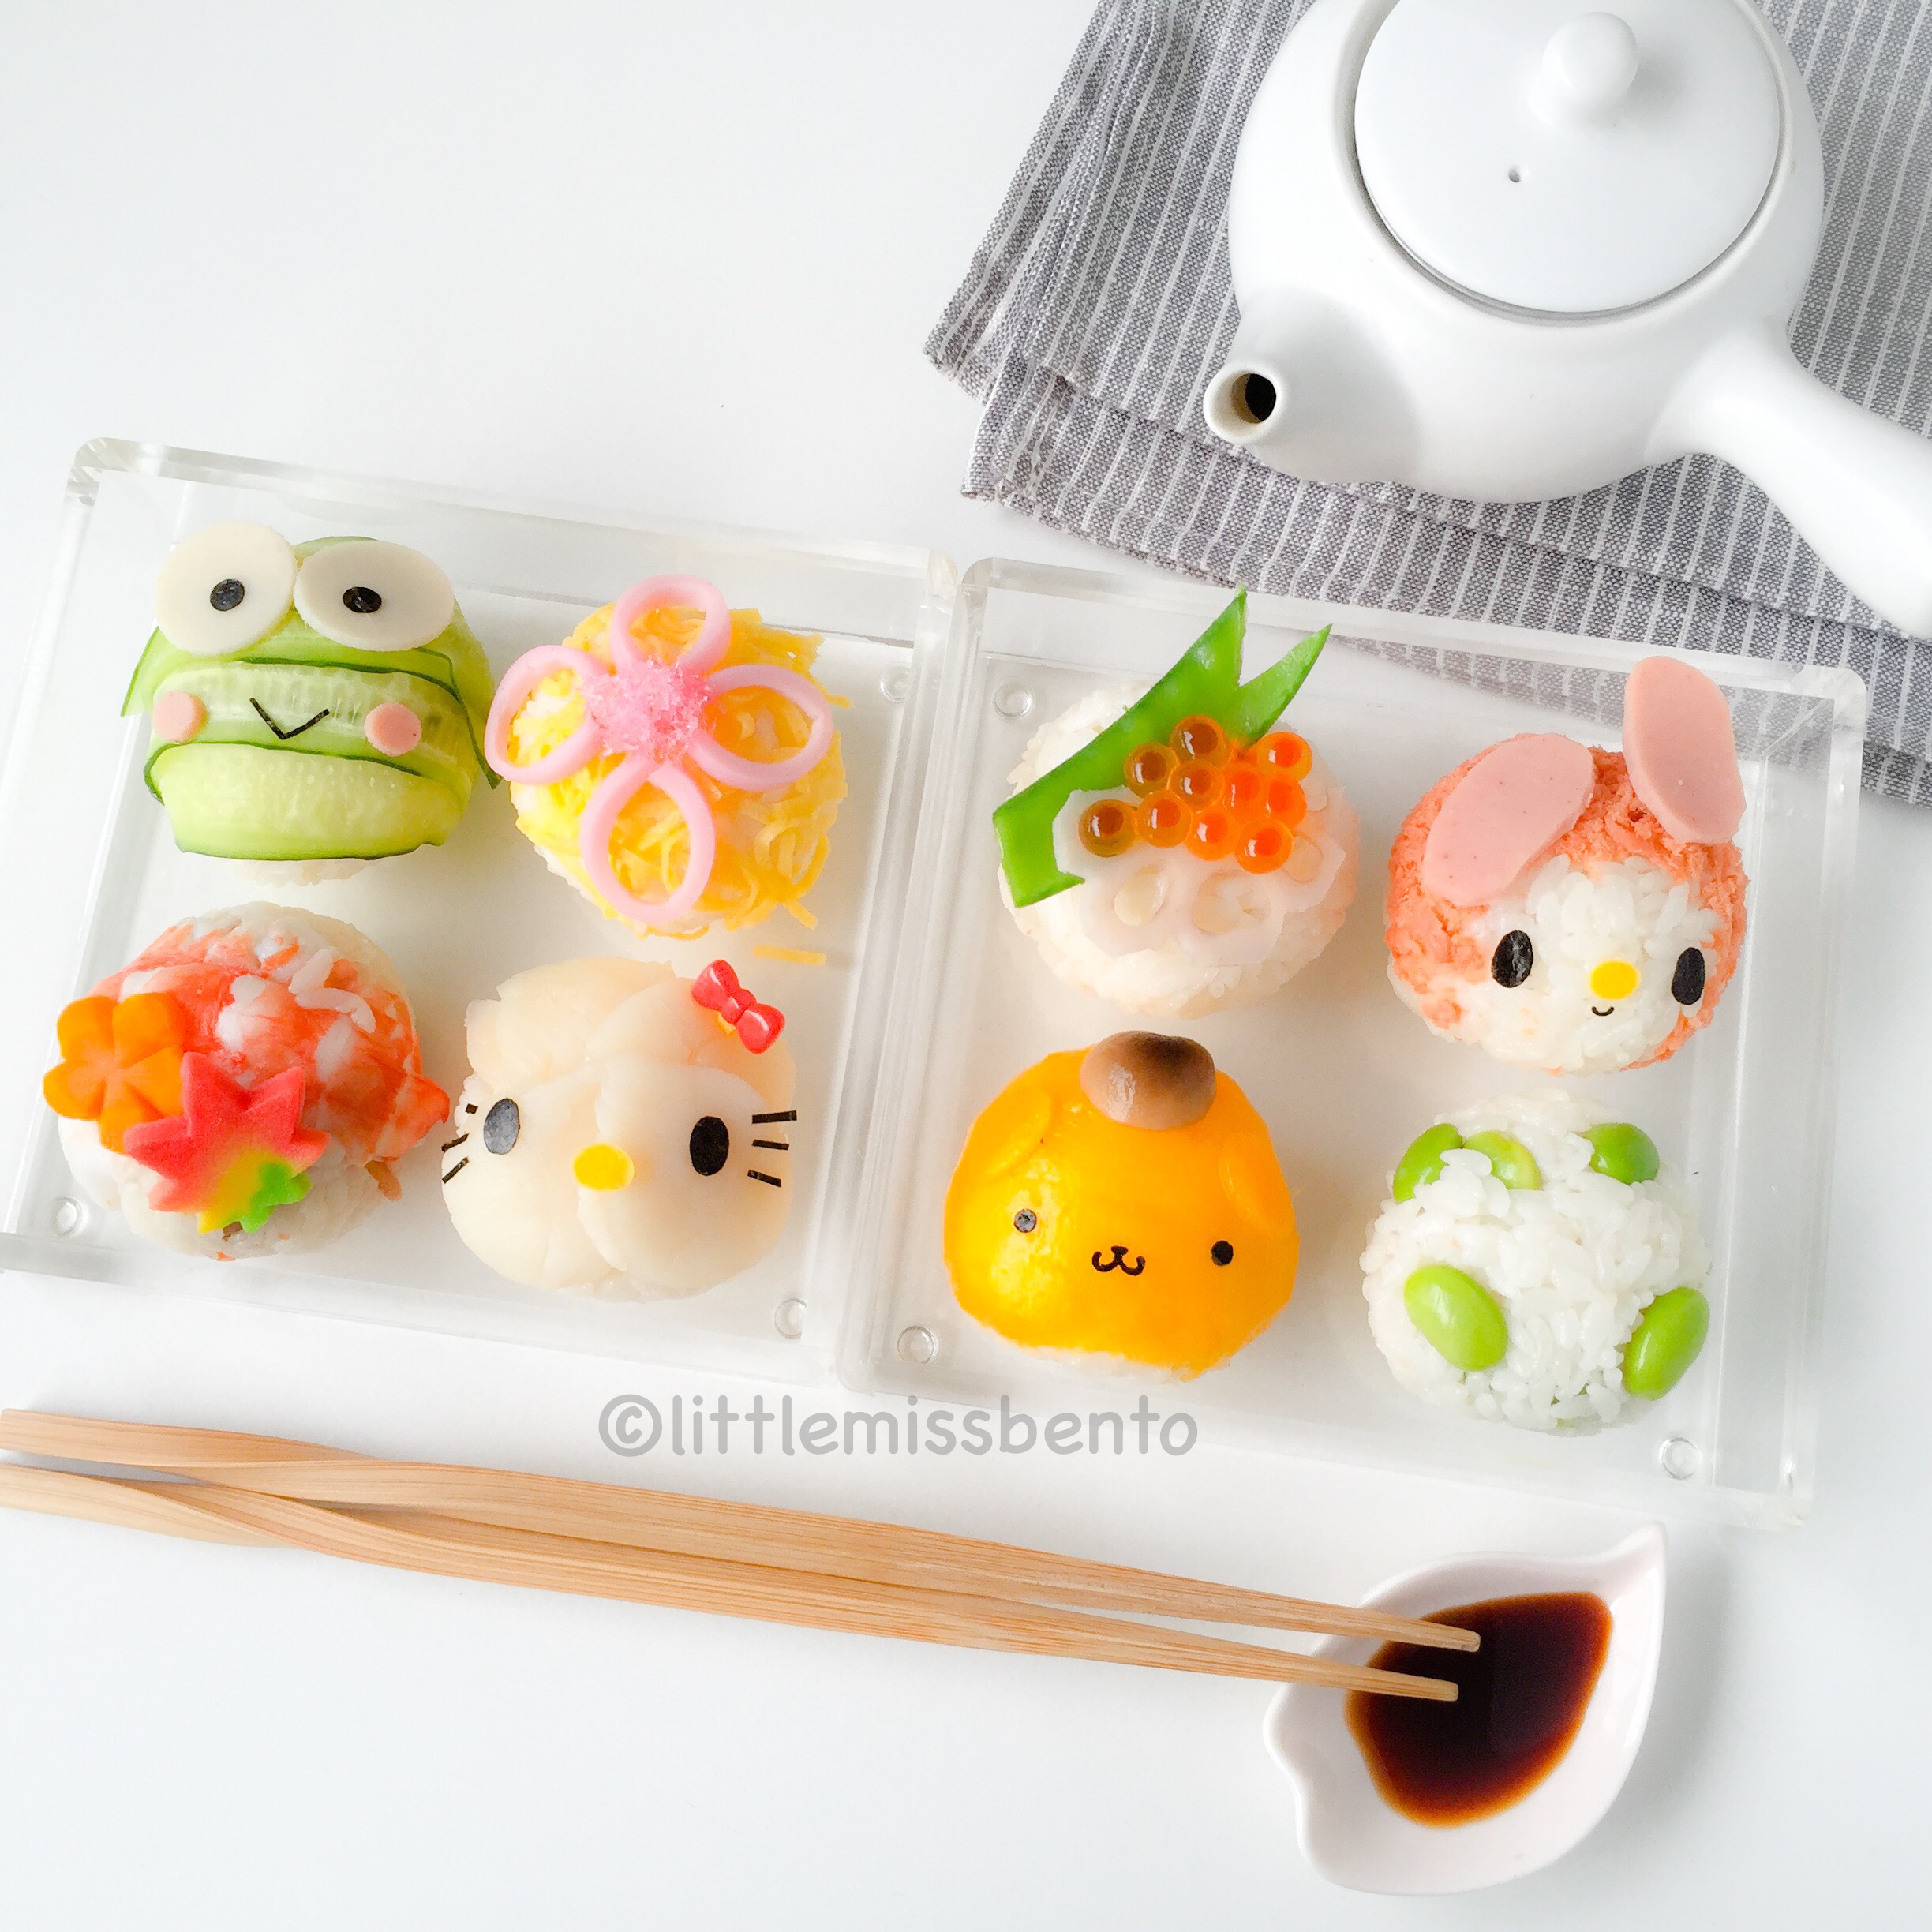 http://littlemissbentoblog.com/wp-content/uploads/2015/01/Sanrio-Temari-Sushi-Bento-3.jpg